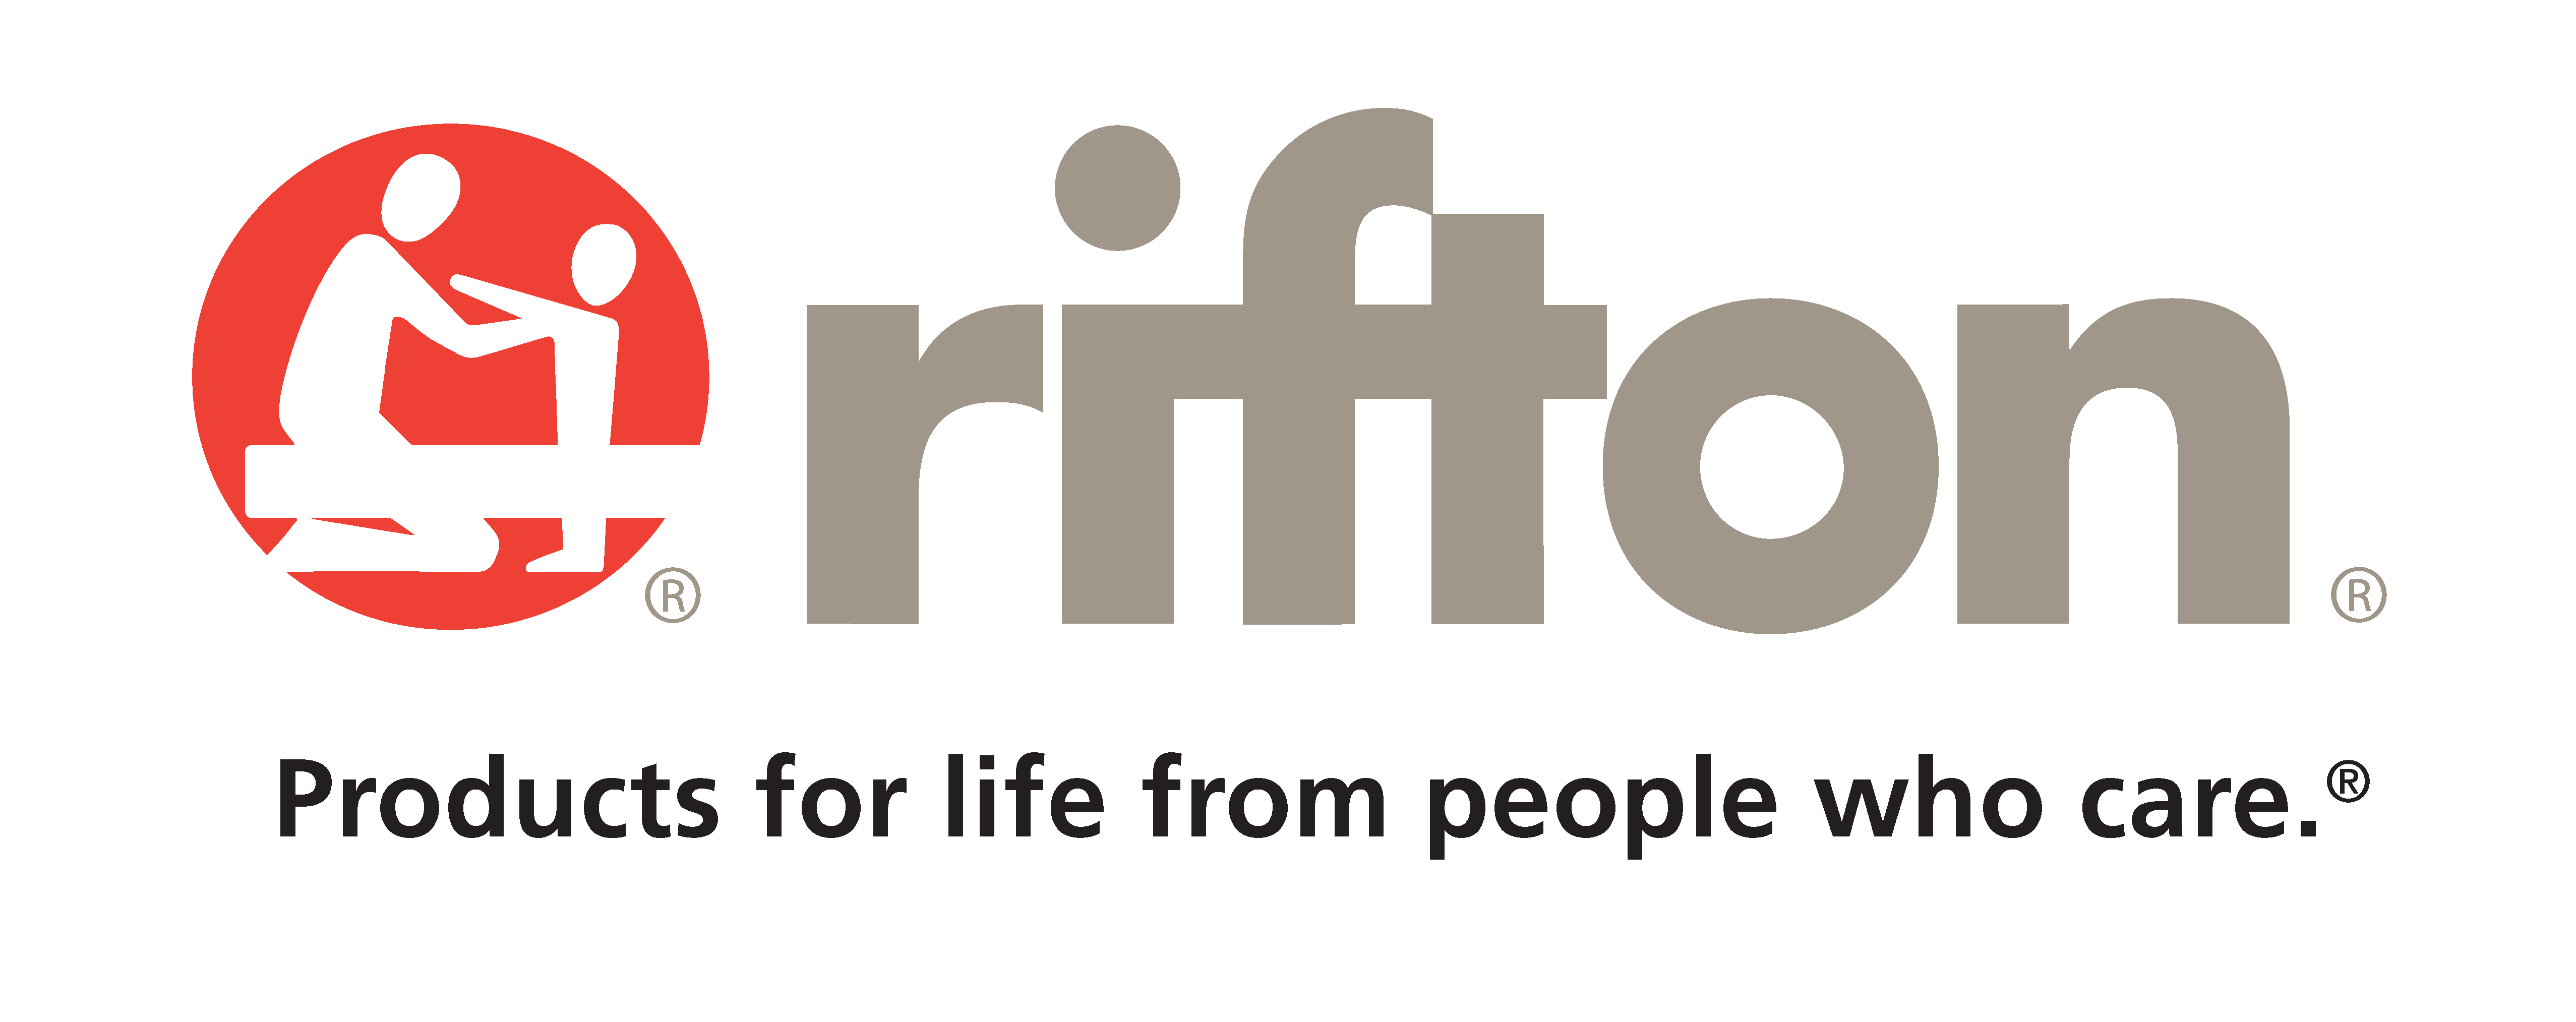 Rifton logo with tagline 